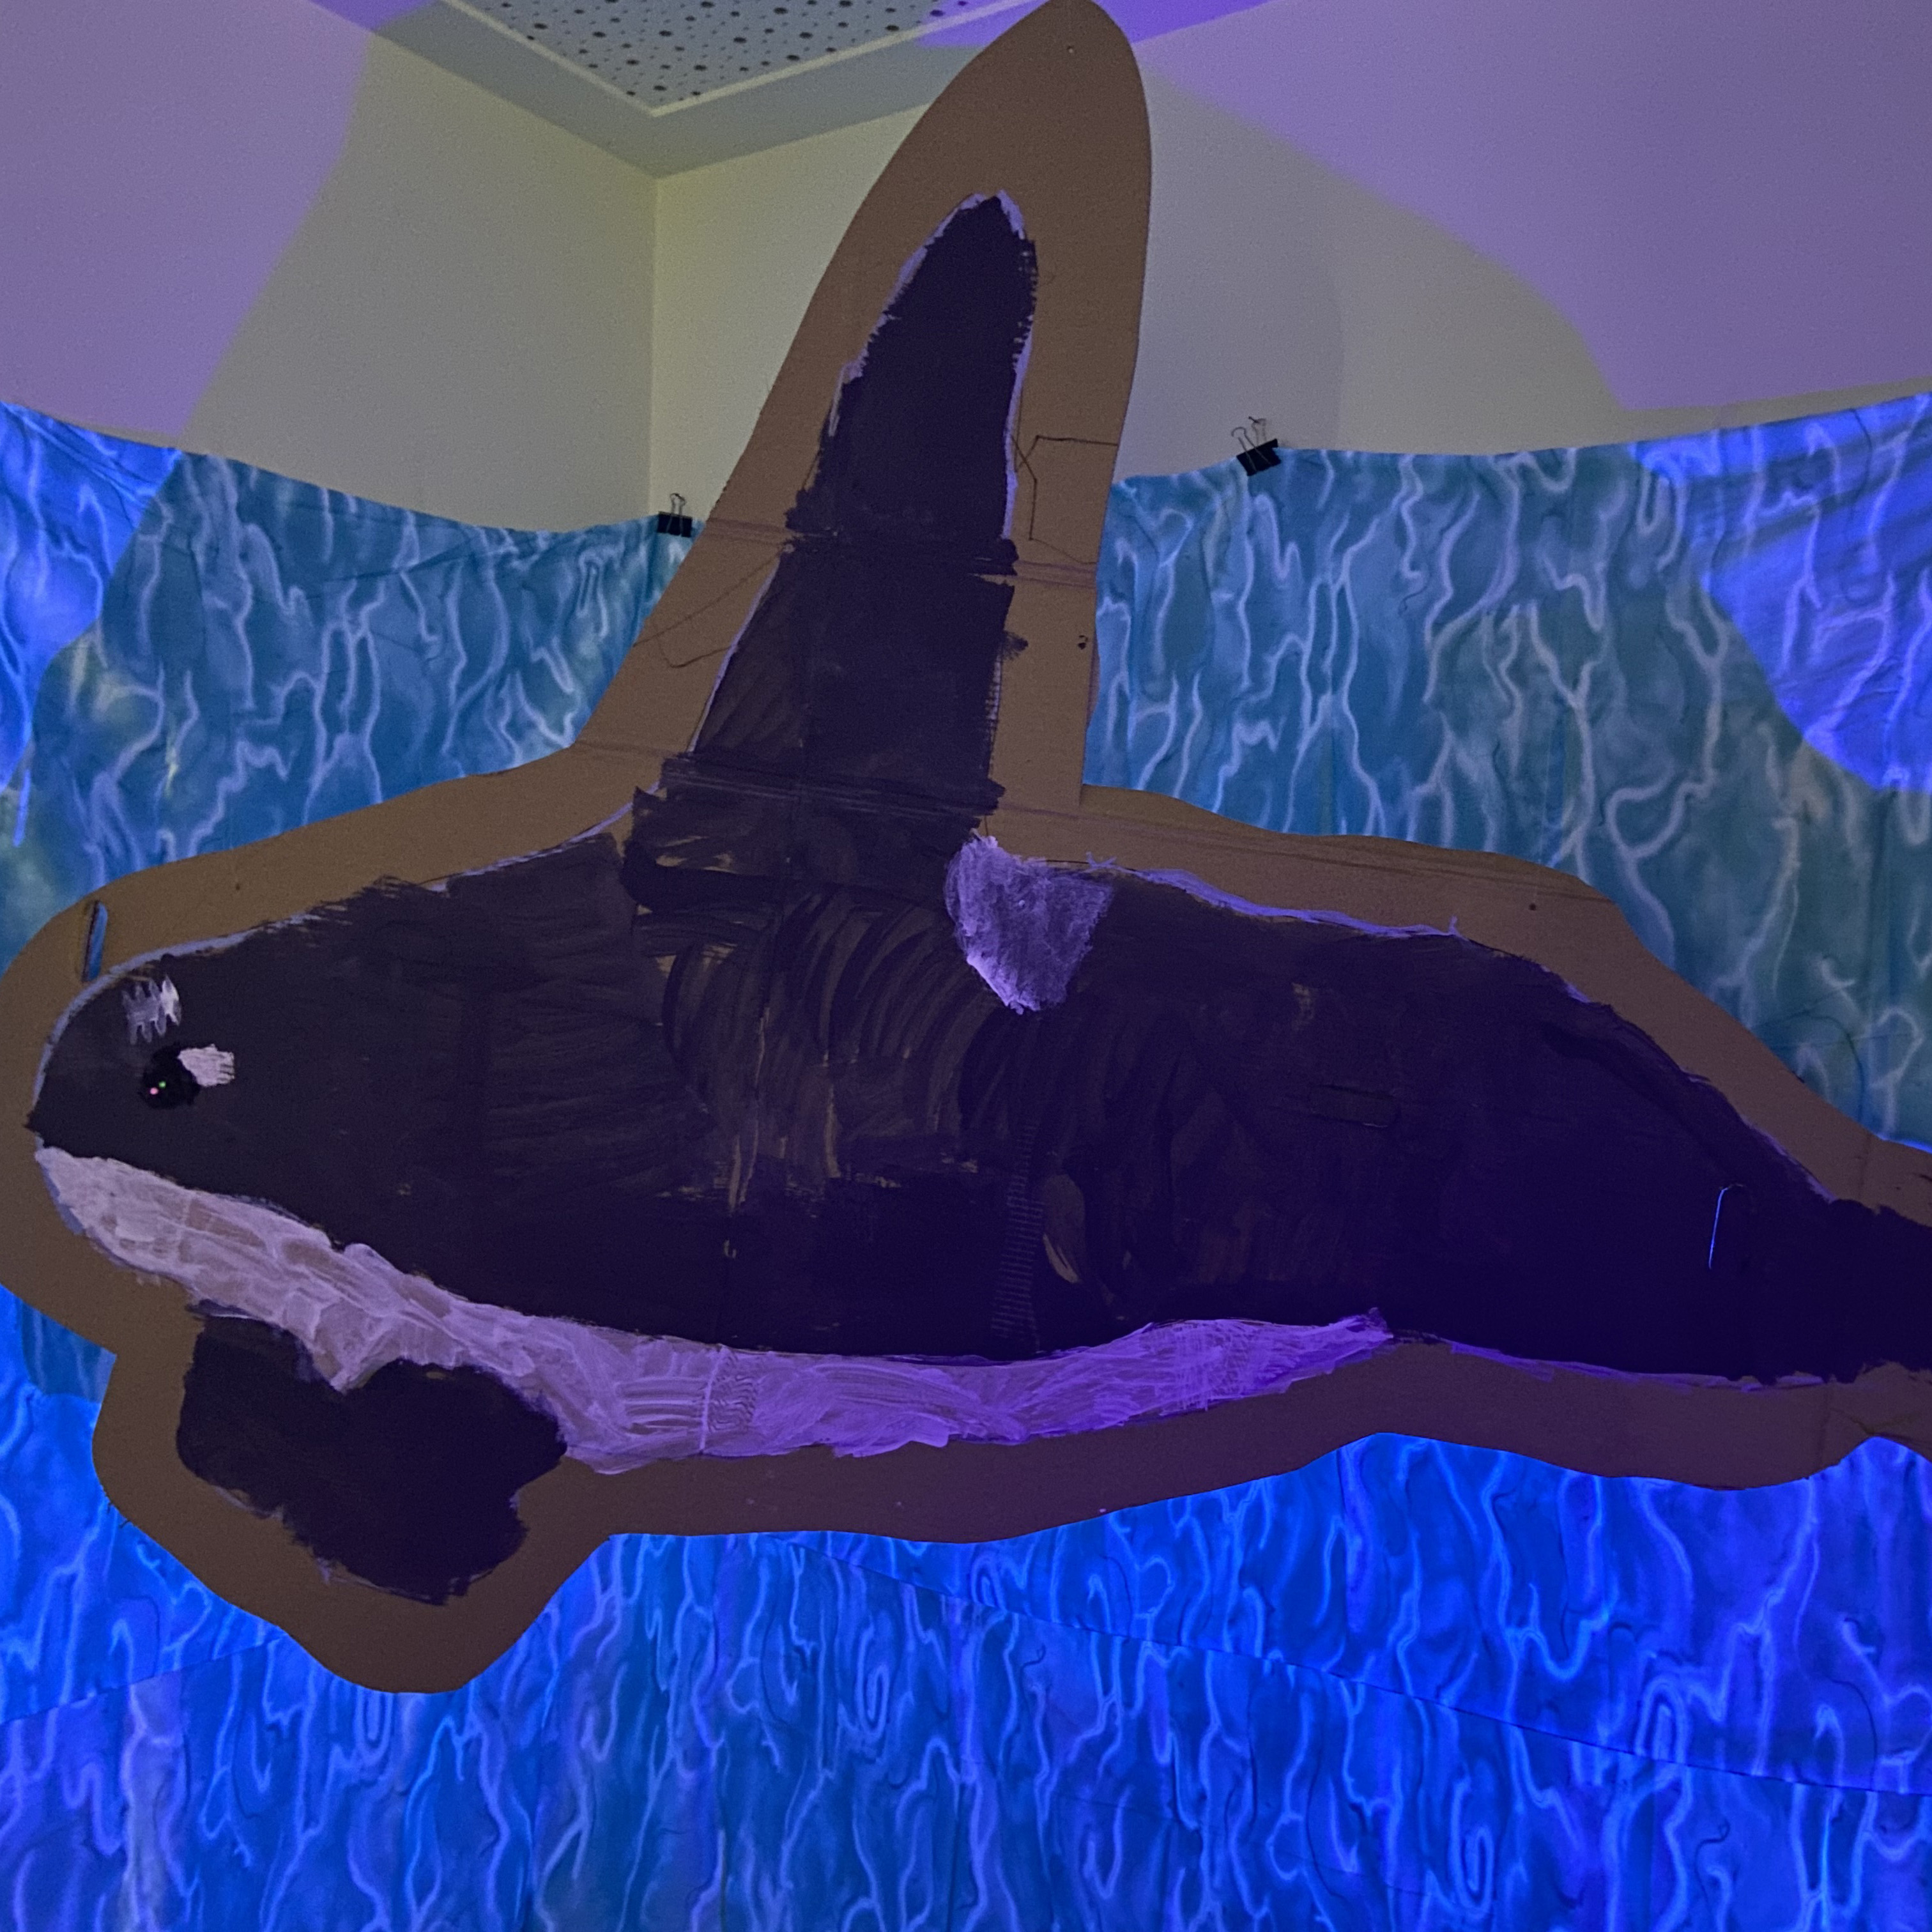 Ein riesiger Orca schmückt die Wand. Foto: Kerstin Kempermann